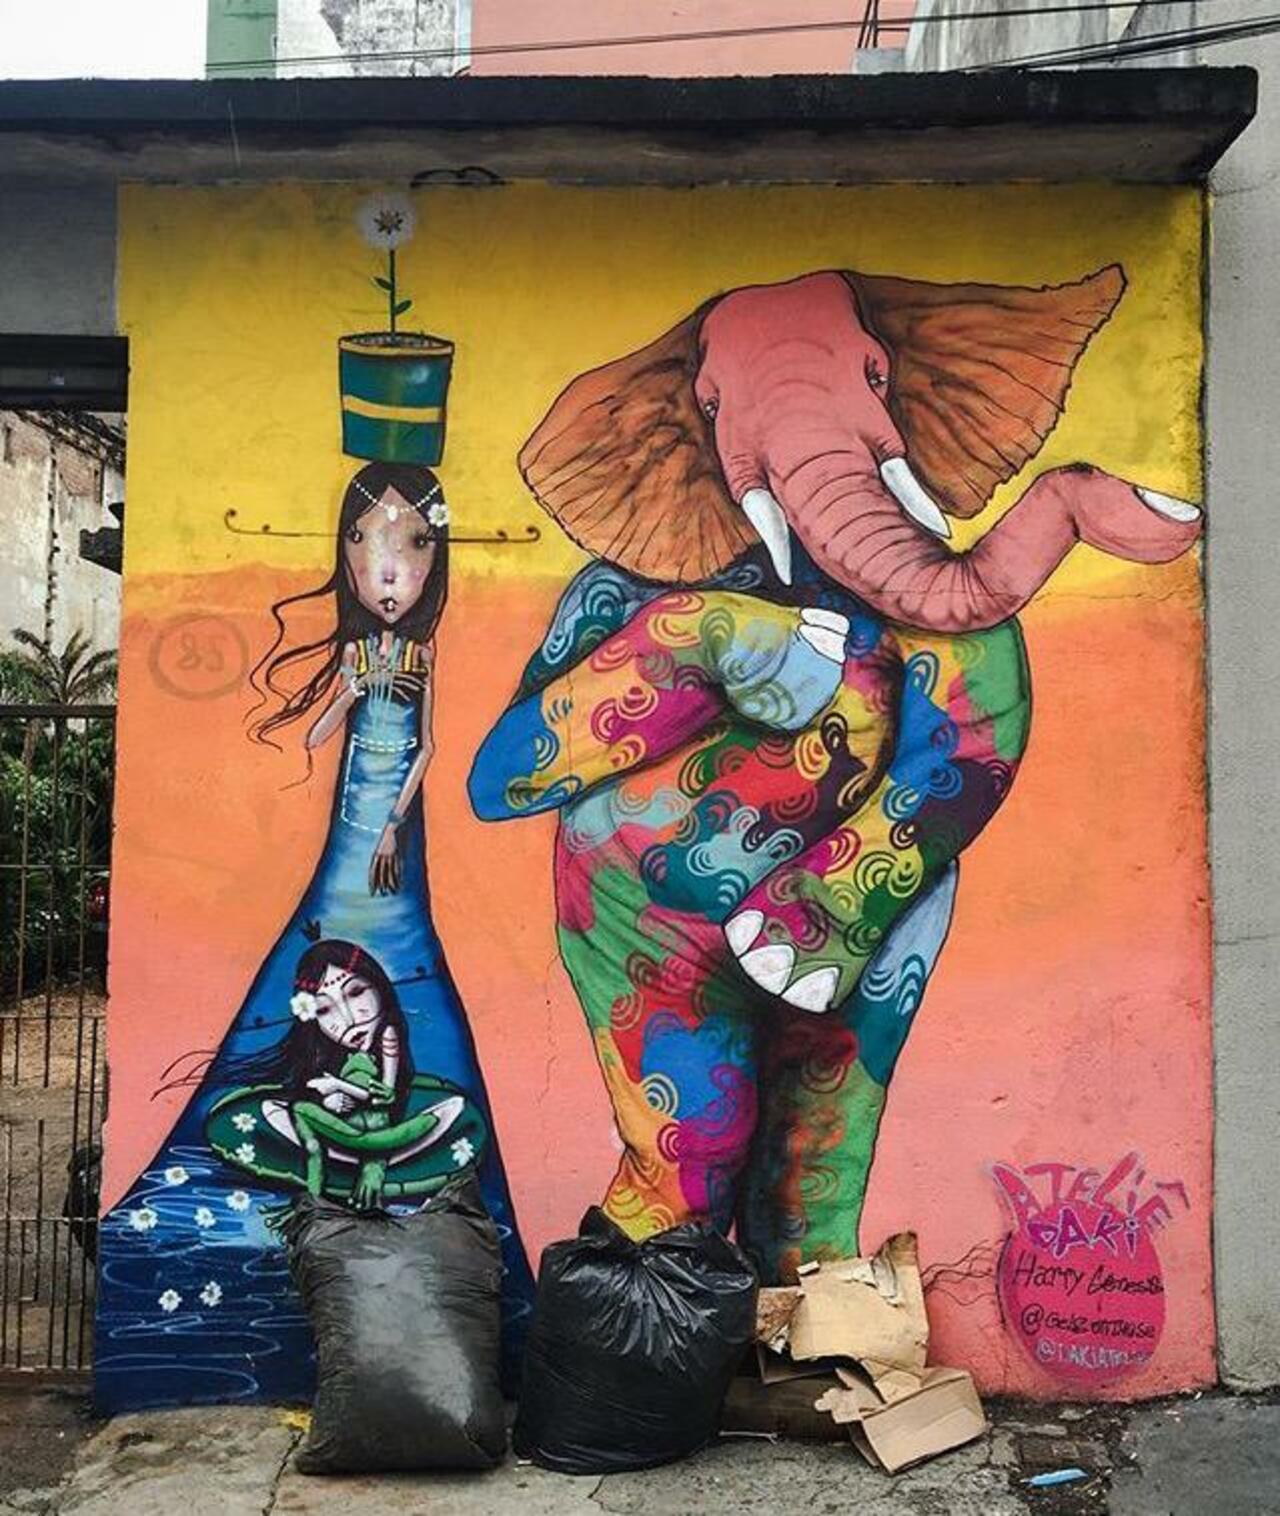 New tumblr post: "Street Art by Harry Geneis & Gelson in São Paulo 

#art #mural #graffiti #streetart http://t.co/2mobRfBjFS" …